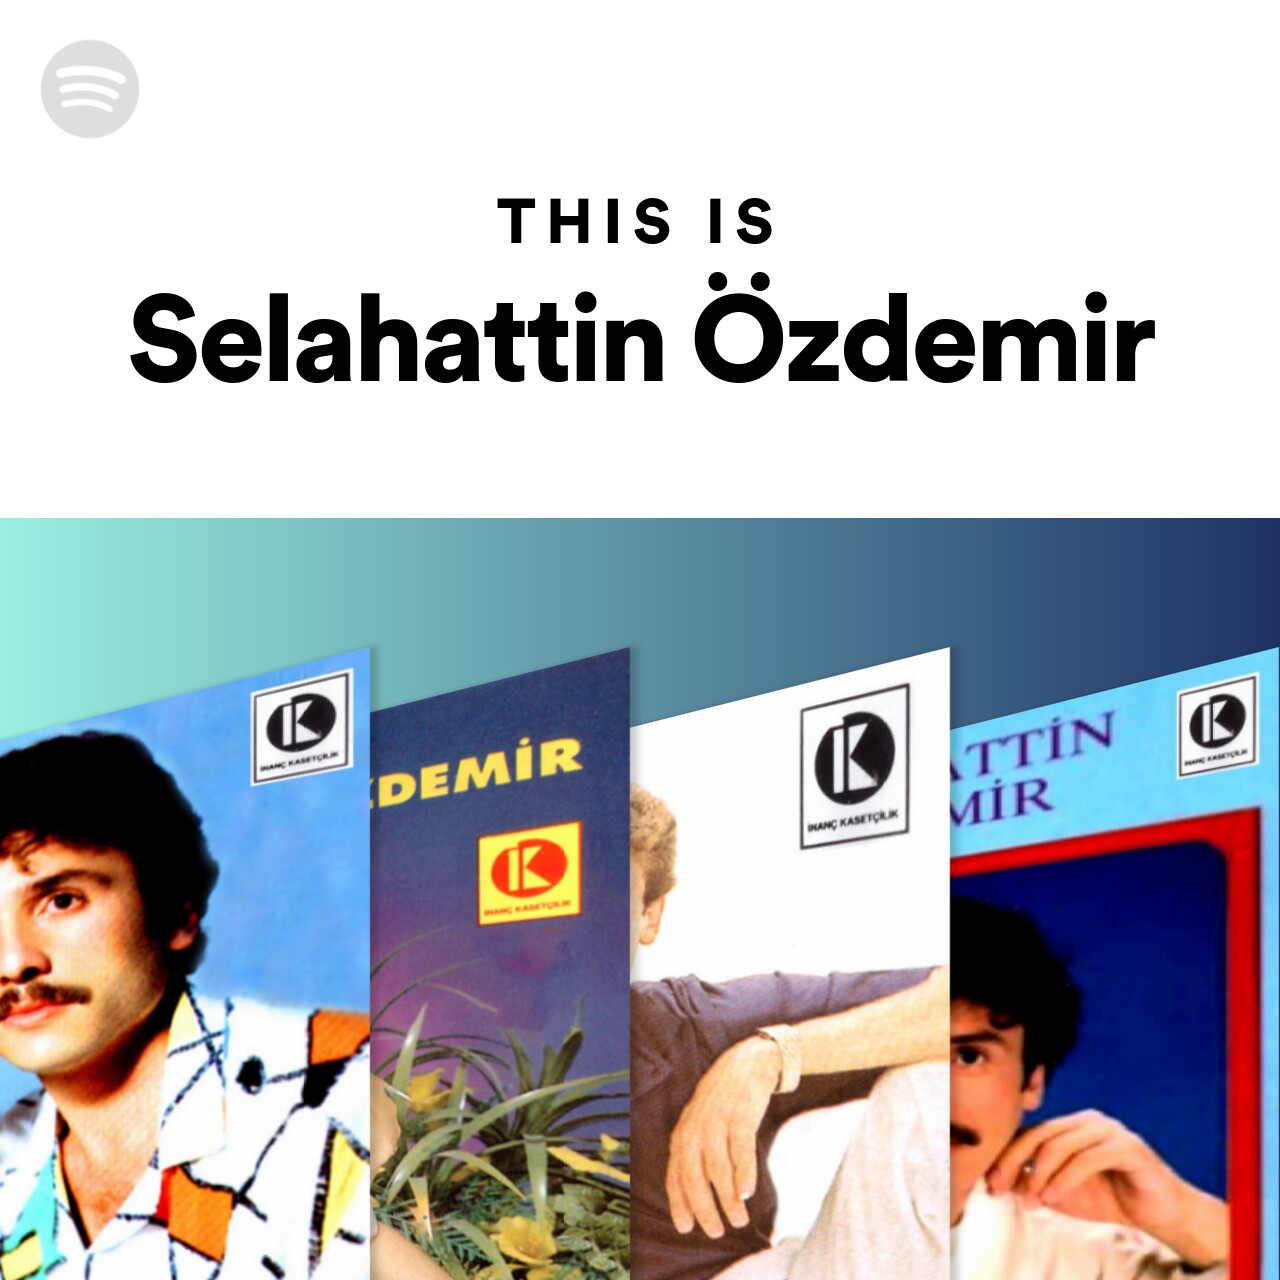 This Is Selahattin Özdemir